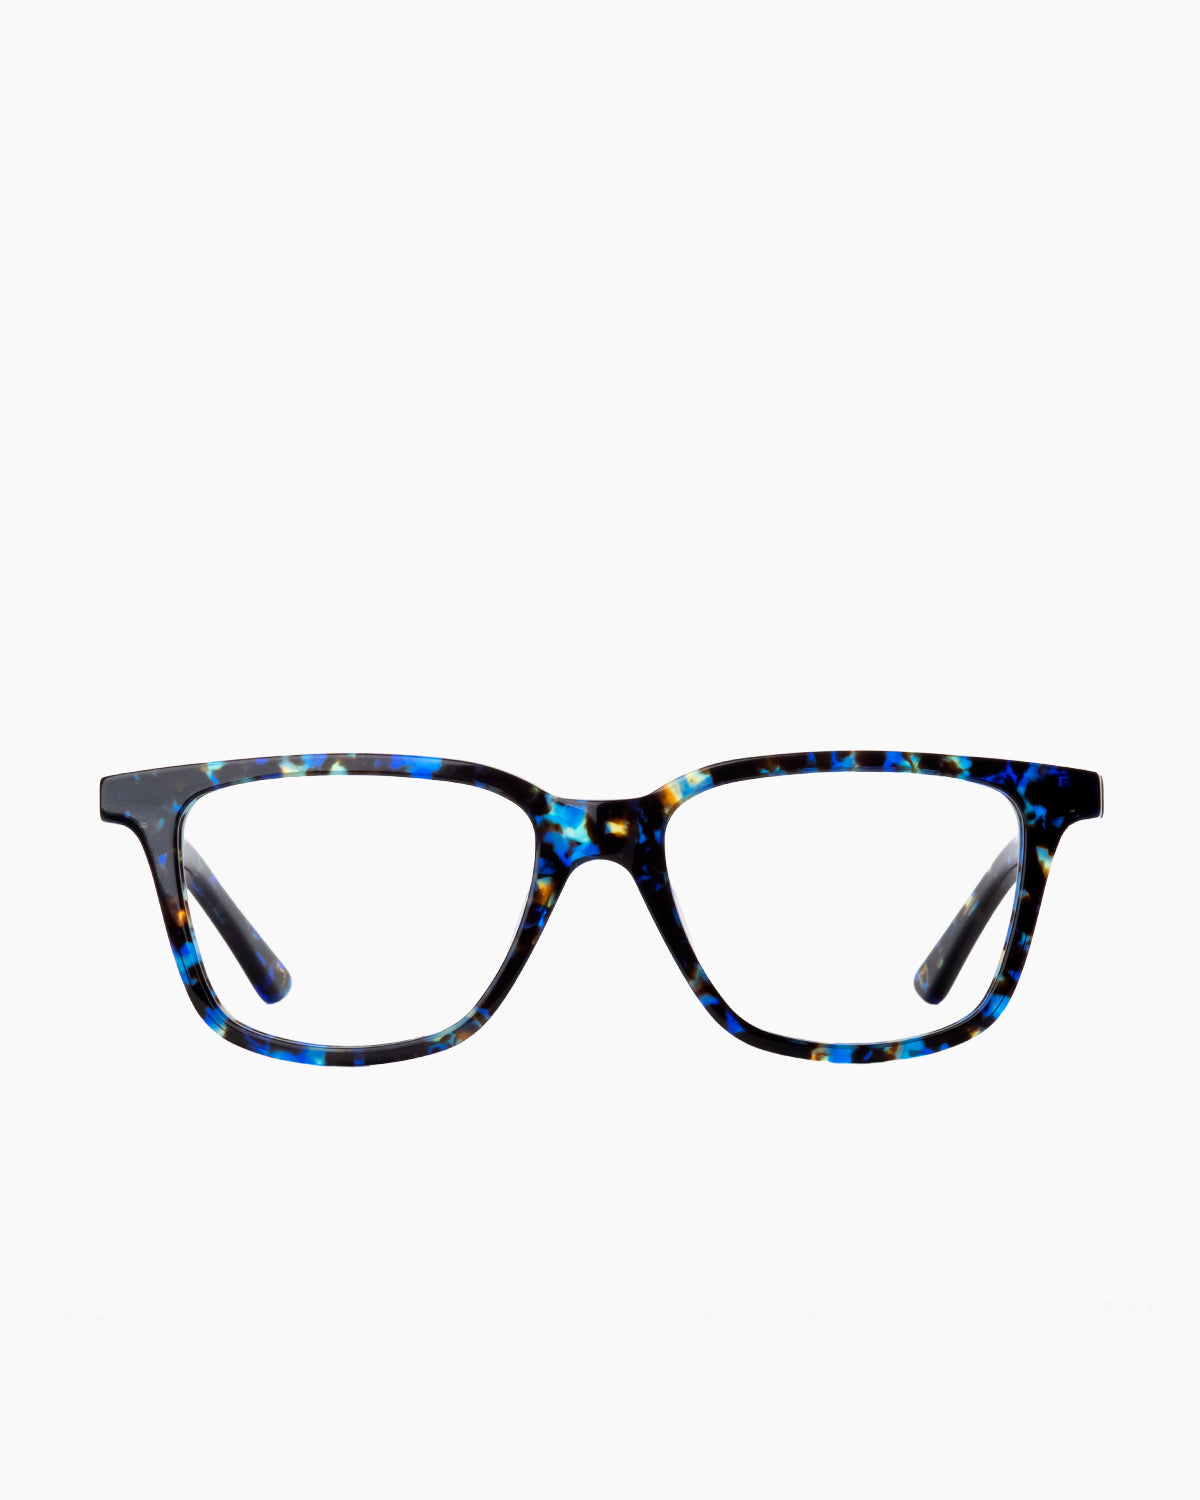 Spectacleeyeworks - Ilan - c716 | Bar à lunettes:  Marie-Sophie Dion